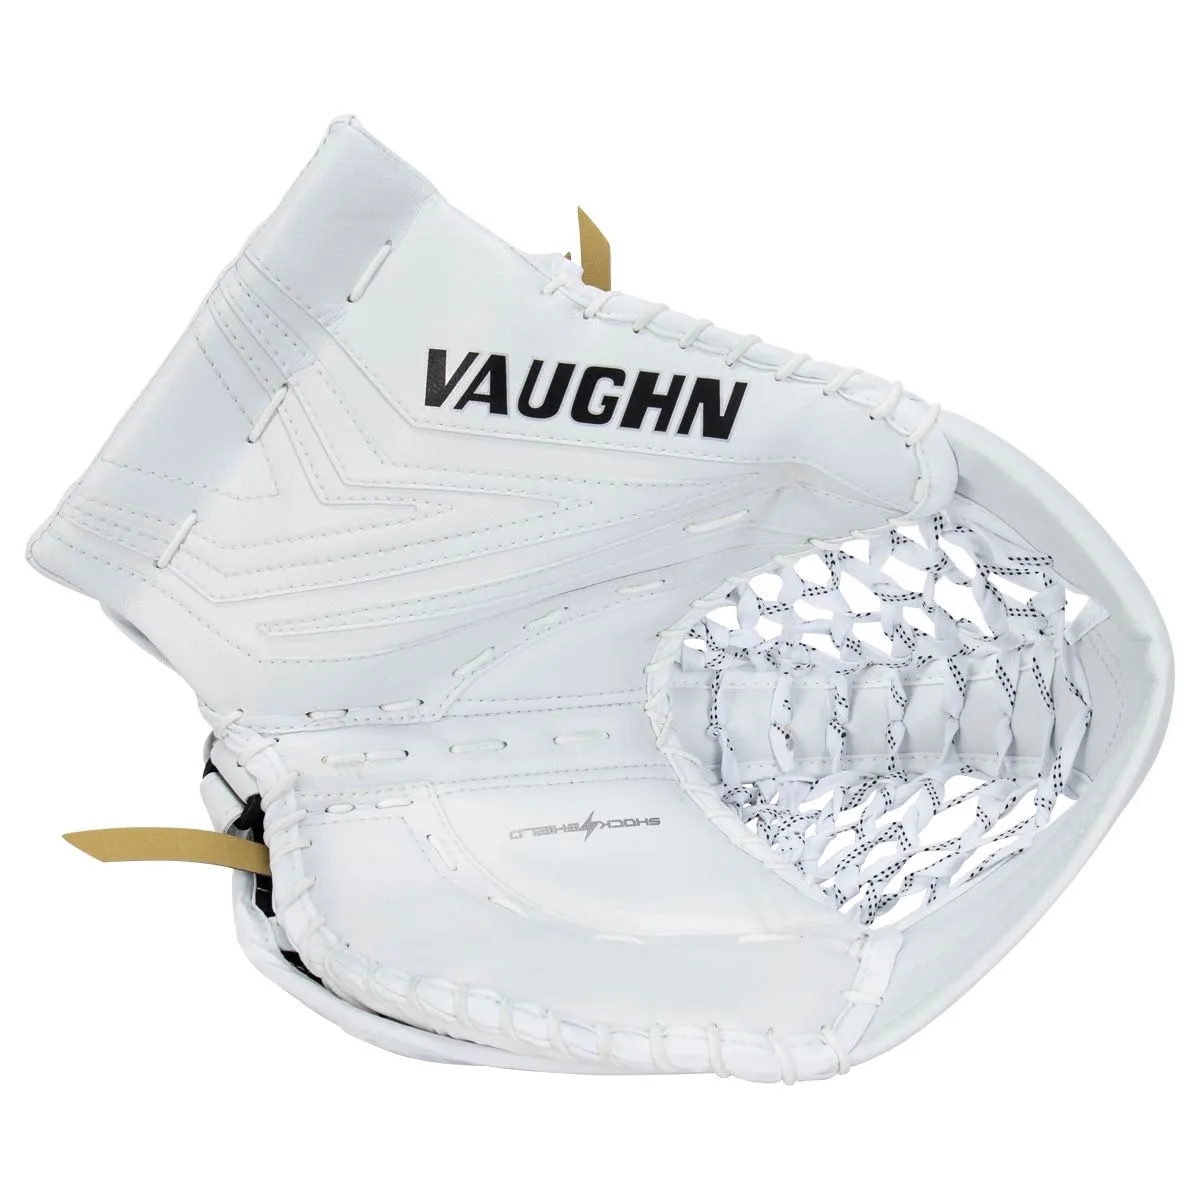 Vaughn Ventus SLR3 Pro Carbon Sr. Goalie Gloveproduct zoom image #1